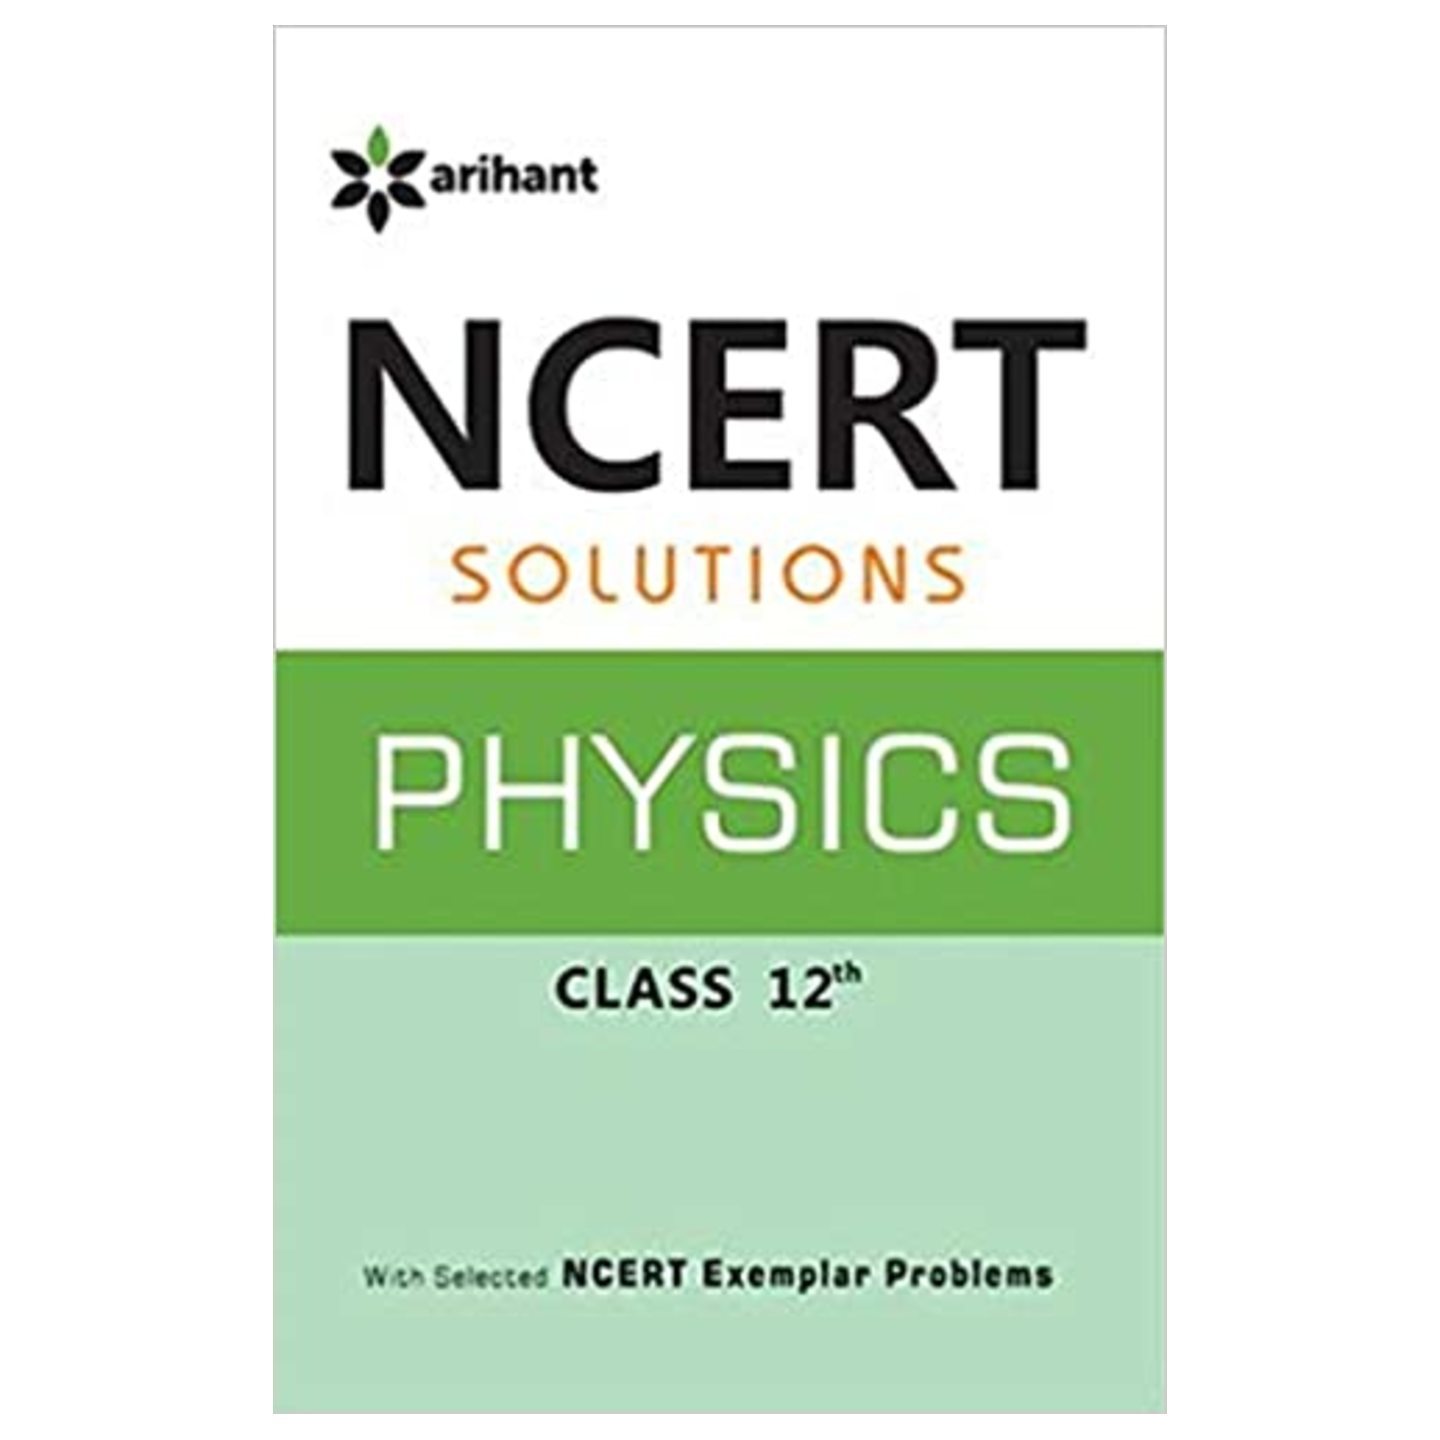 NCERT Solutions Physics 12th ARIHANT